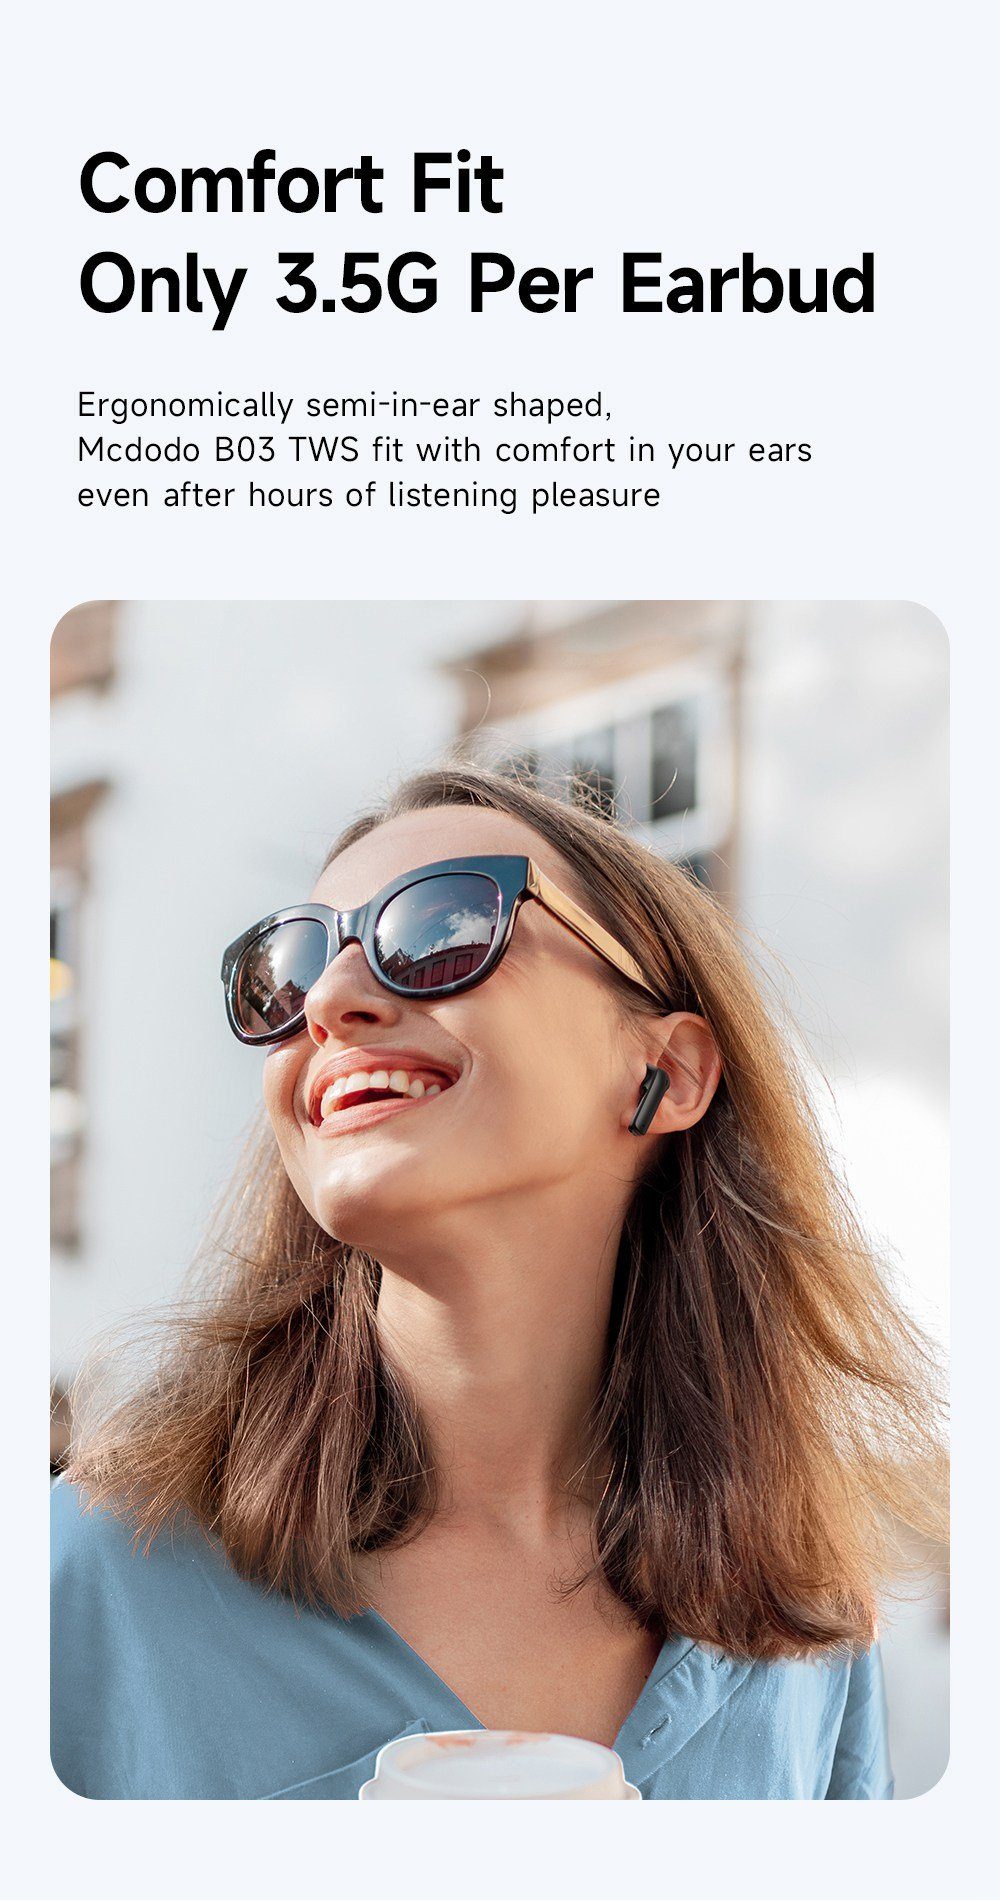 Bluetooth TWS Weiß mcdodo Wireless 5.1 Touch Earbud Kopfhörer Control In-Ear-Kopfhörer wireless IPX4